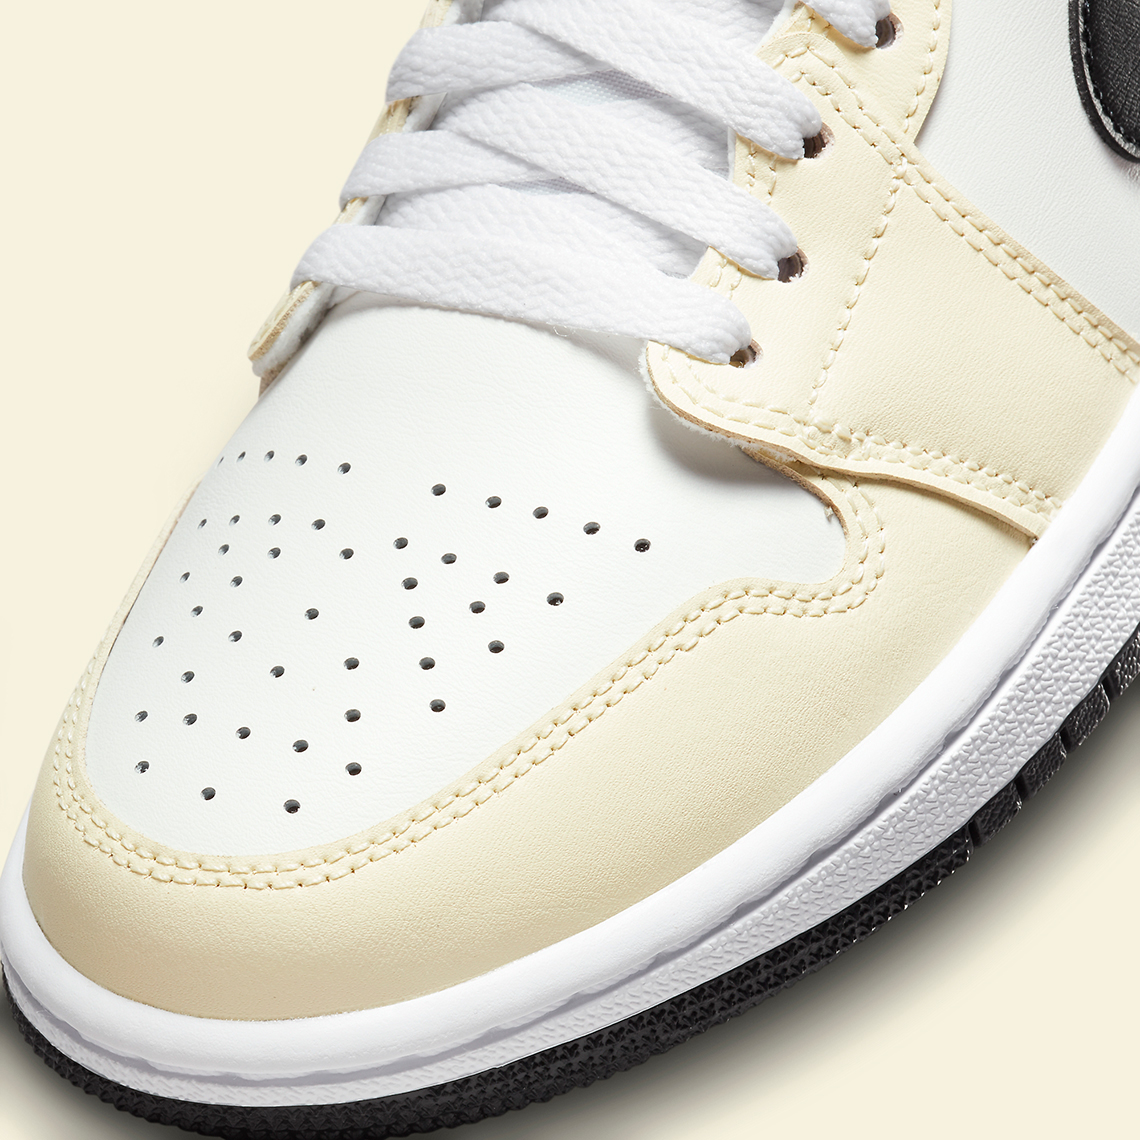 Air Jordan Air Cadence Marathon Running Shoes Sneakers CN3498-006